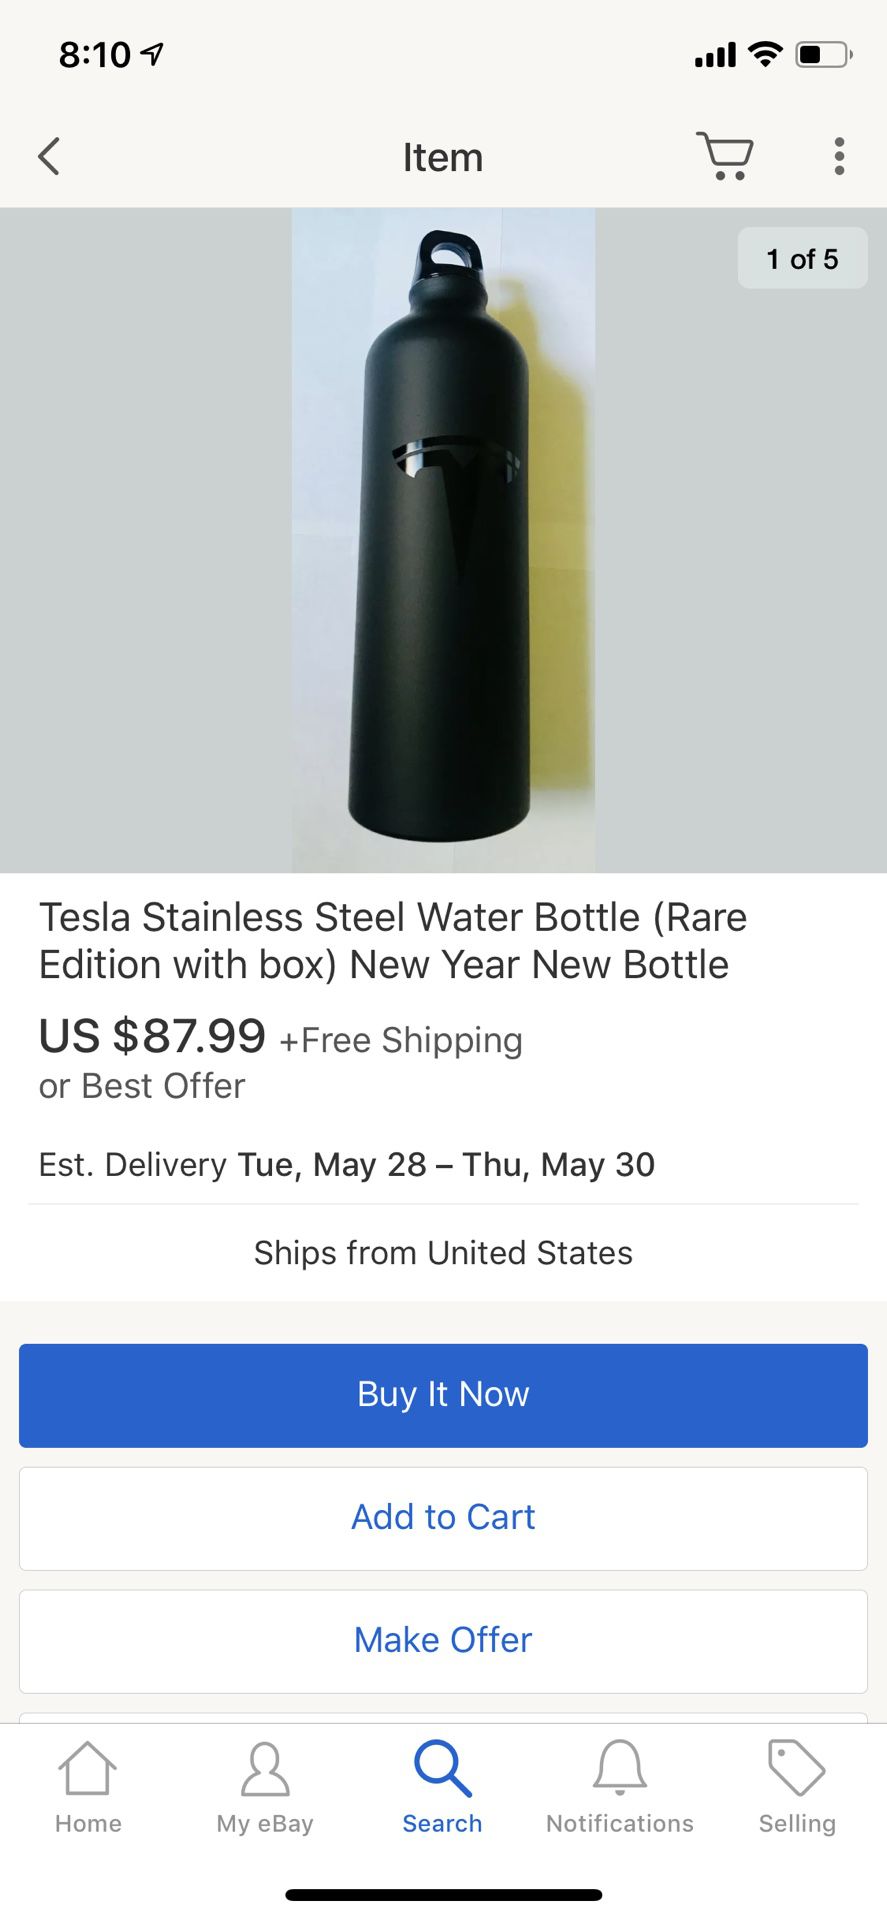 Water Bottle OWALA for Sale in Los Angeles, CA - OfferUp